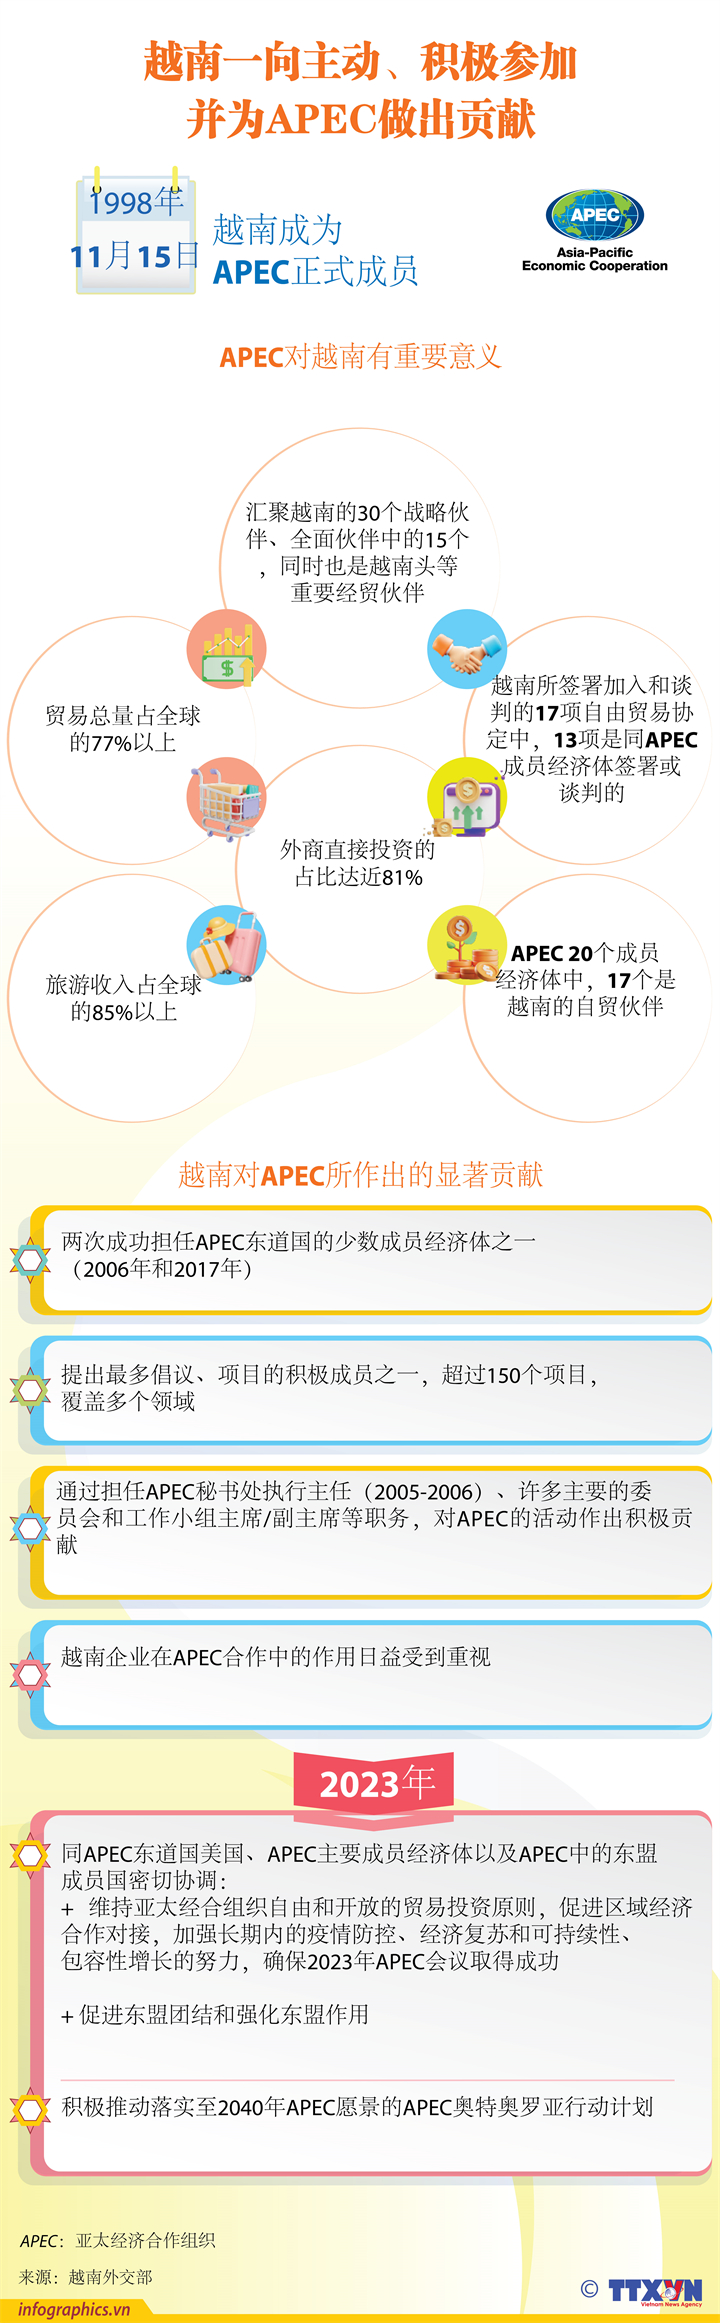 Vietnam making proactive contributions to APEC